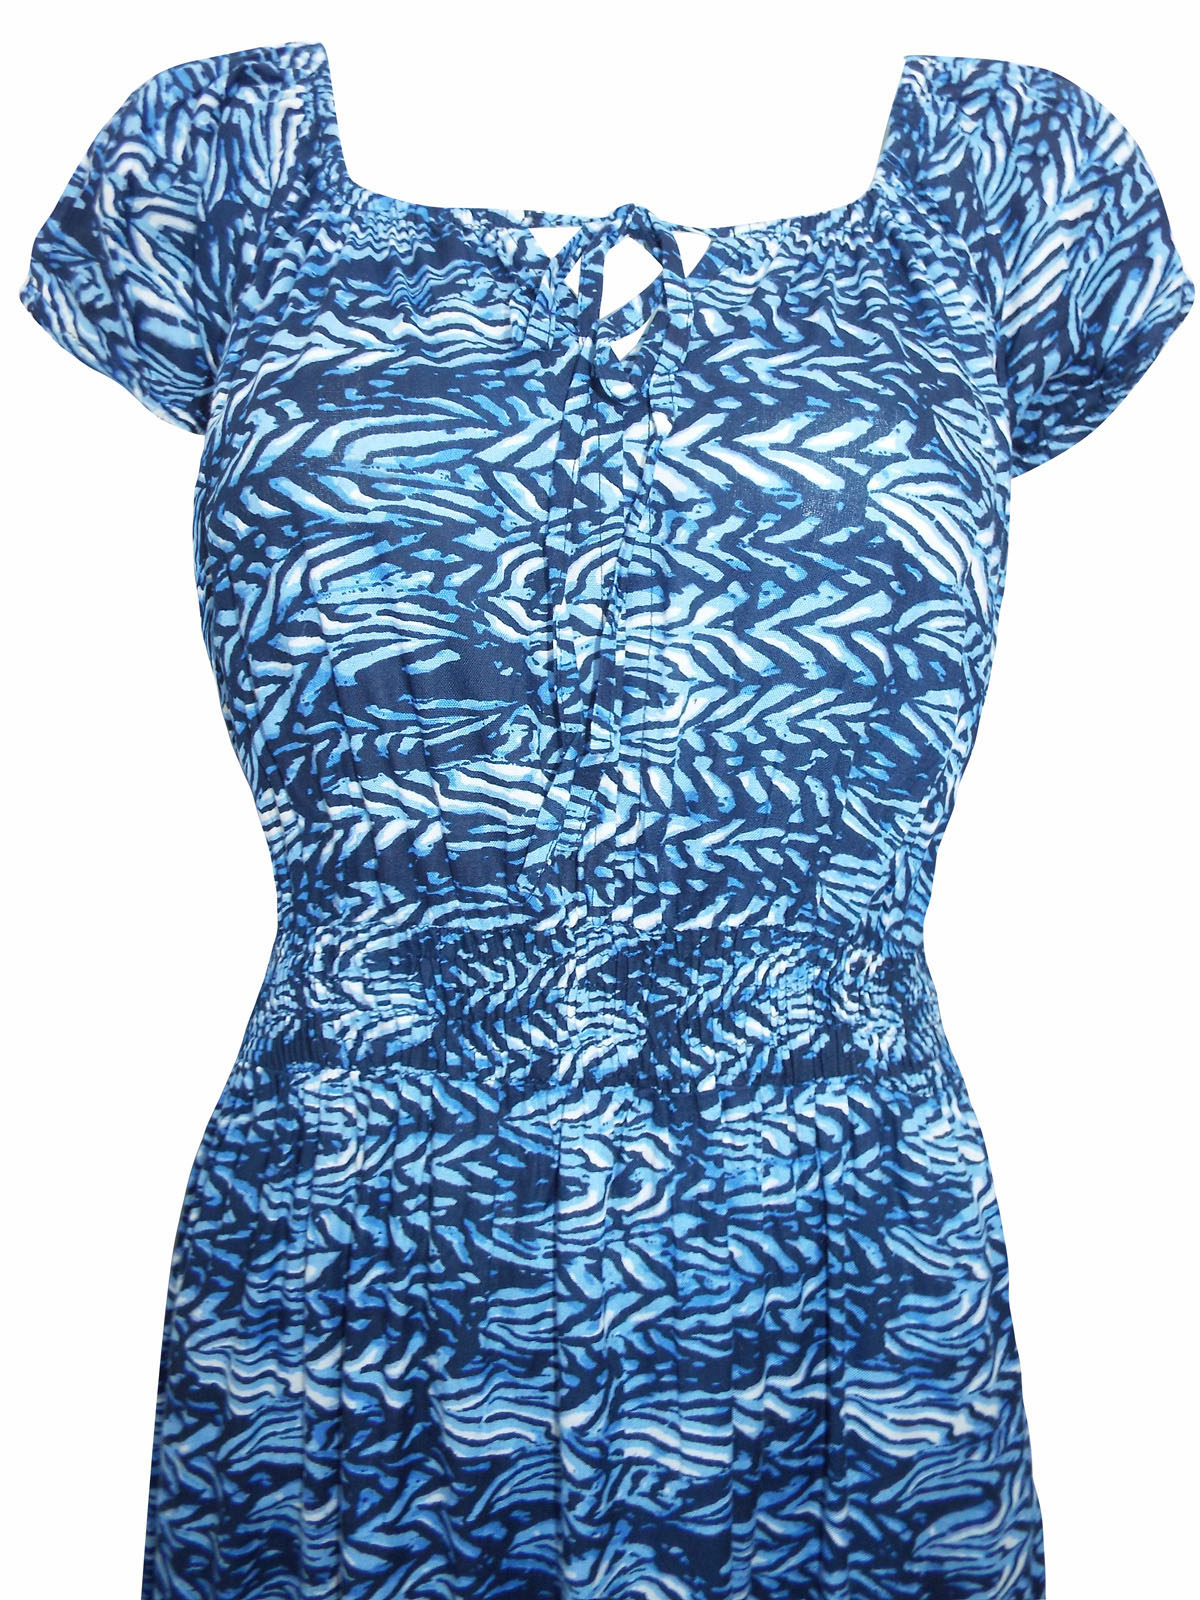 Arista - - Arista BLUE Printed Tie Neck Maxi Dress - Size 12 to 20